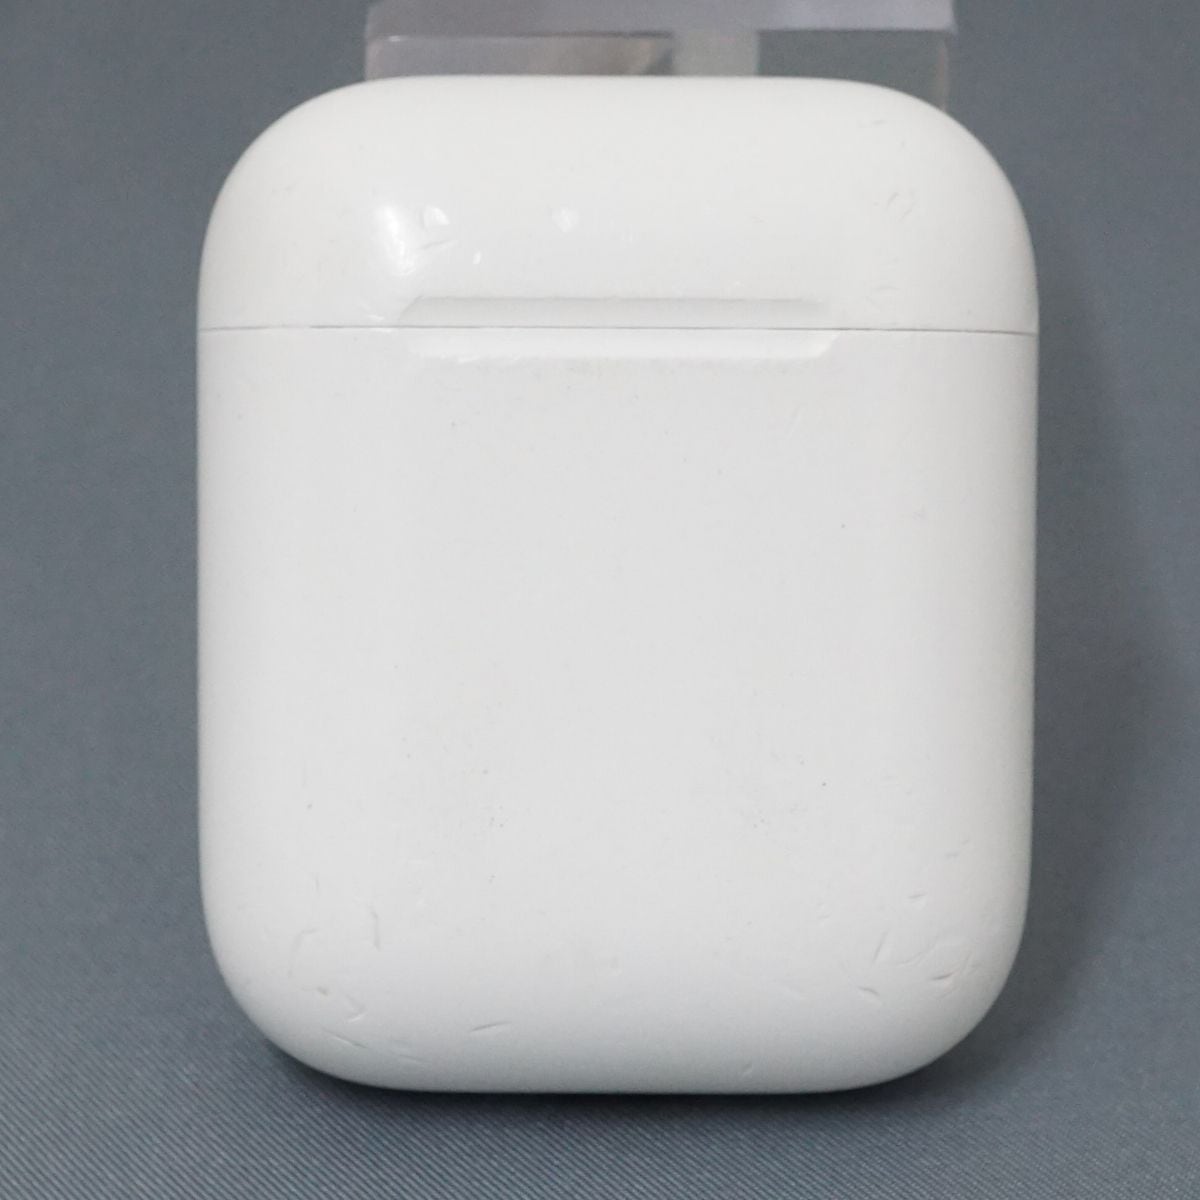 Apple AirPods エアーポッズ 充電ケースのみ 第1世代 USED品 ...